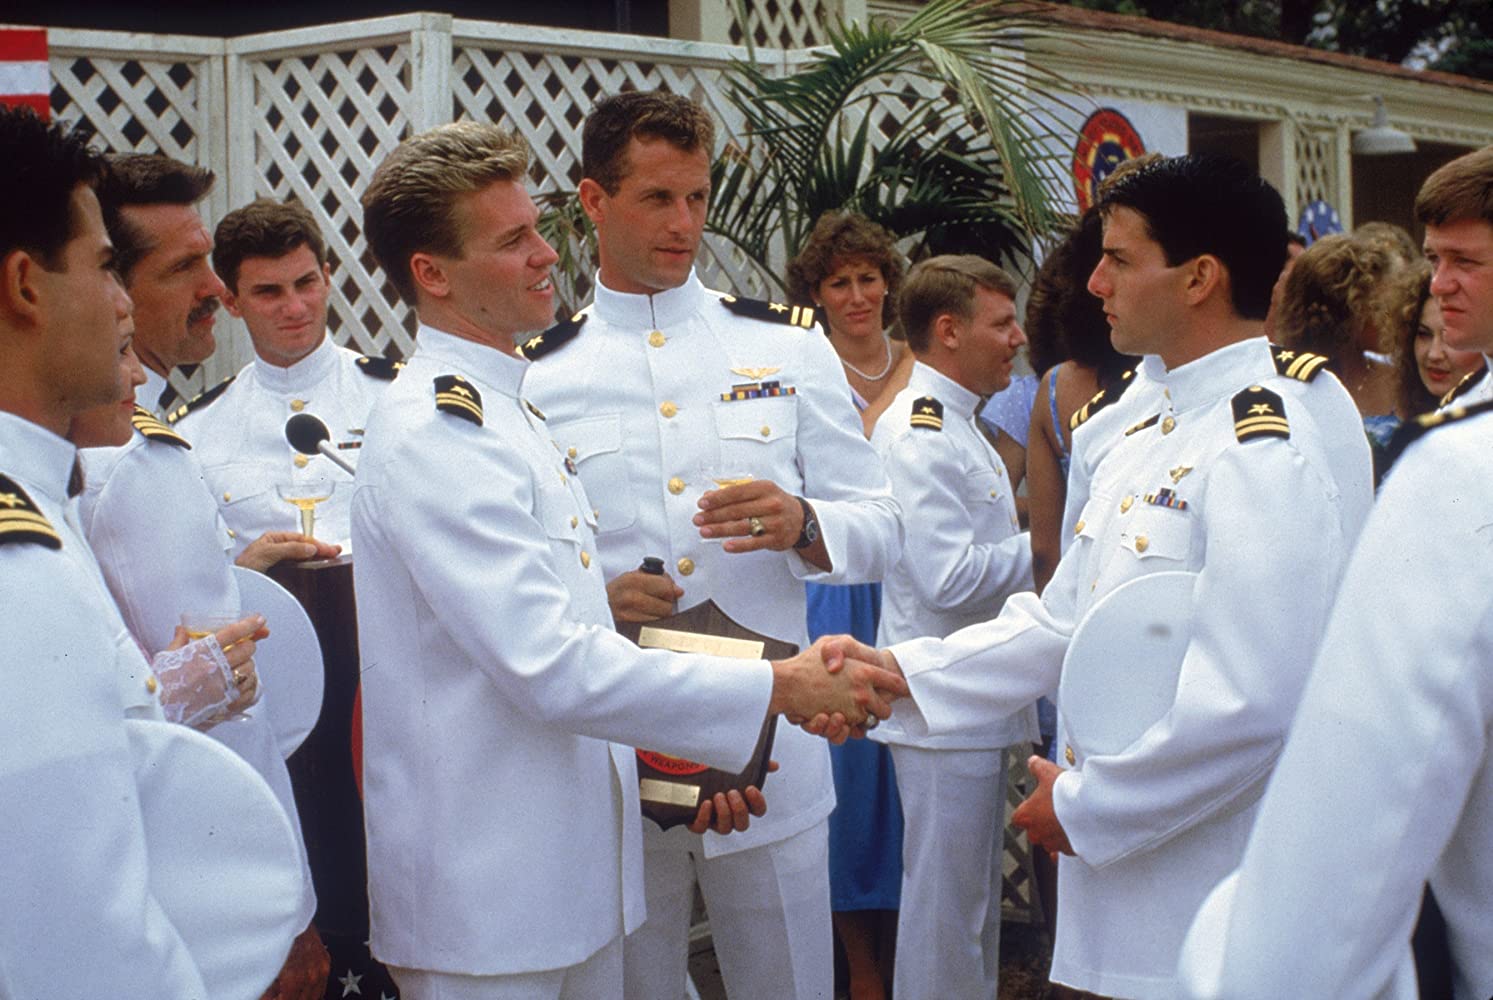 Tom Cruise, Val Kilmer, Tom Skerritt, Rick Rossovich, and Adrian Pasdar in Top Gun